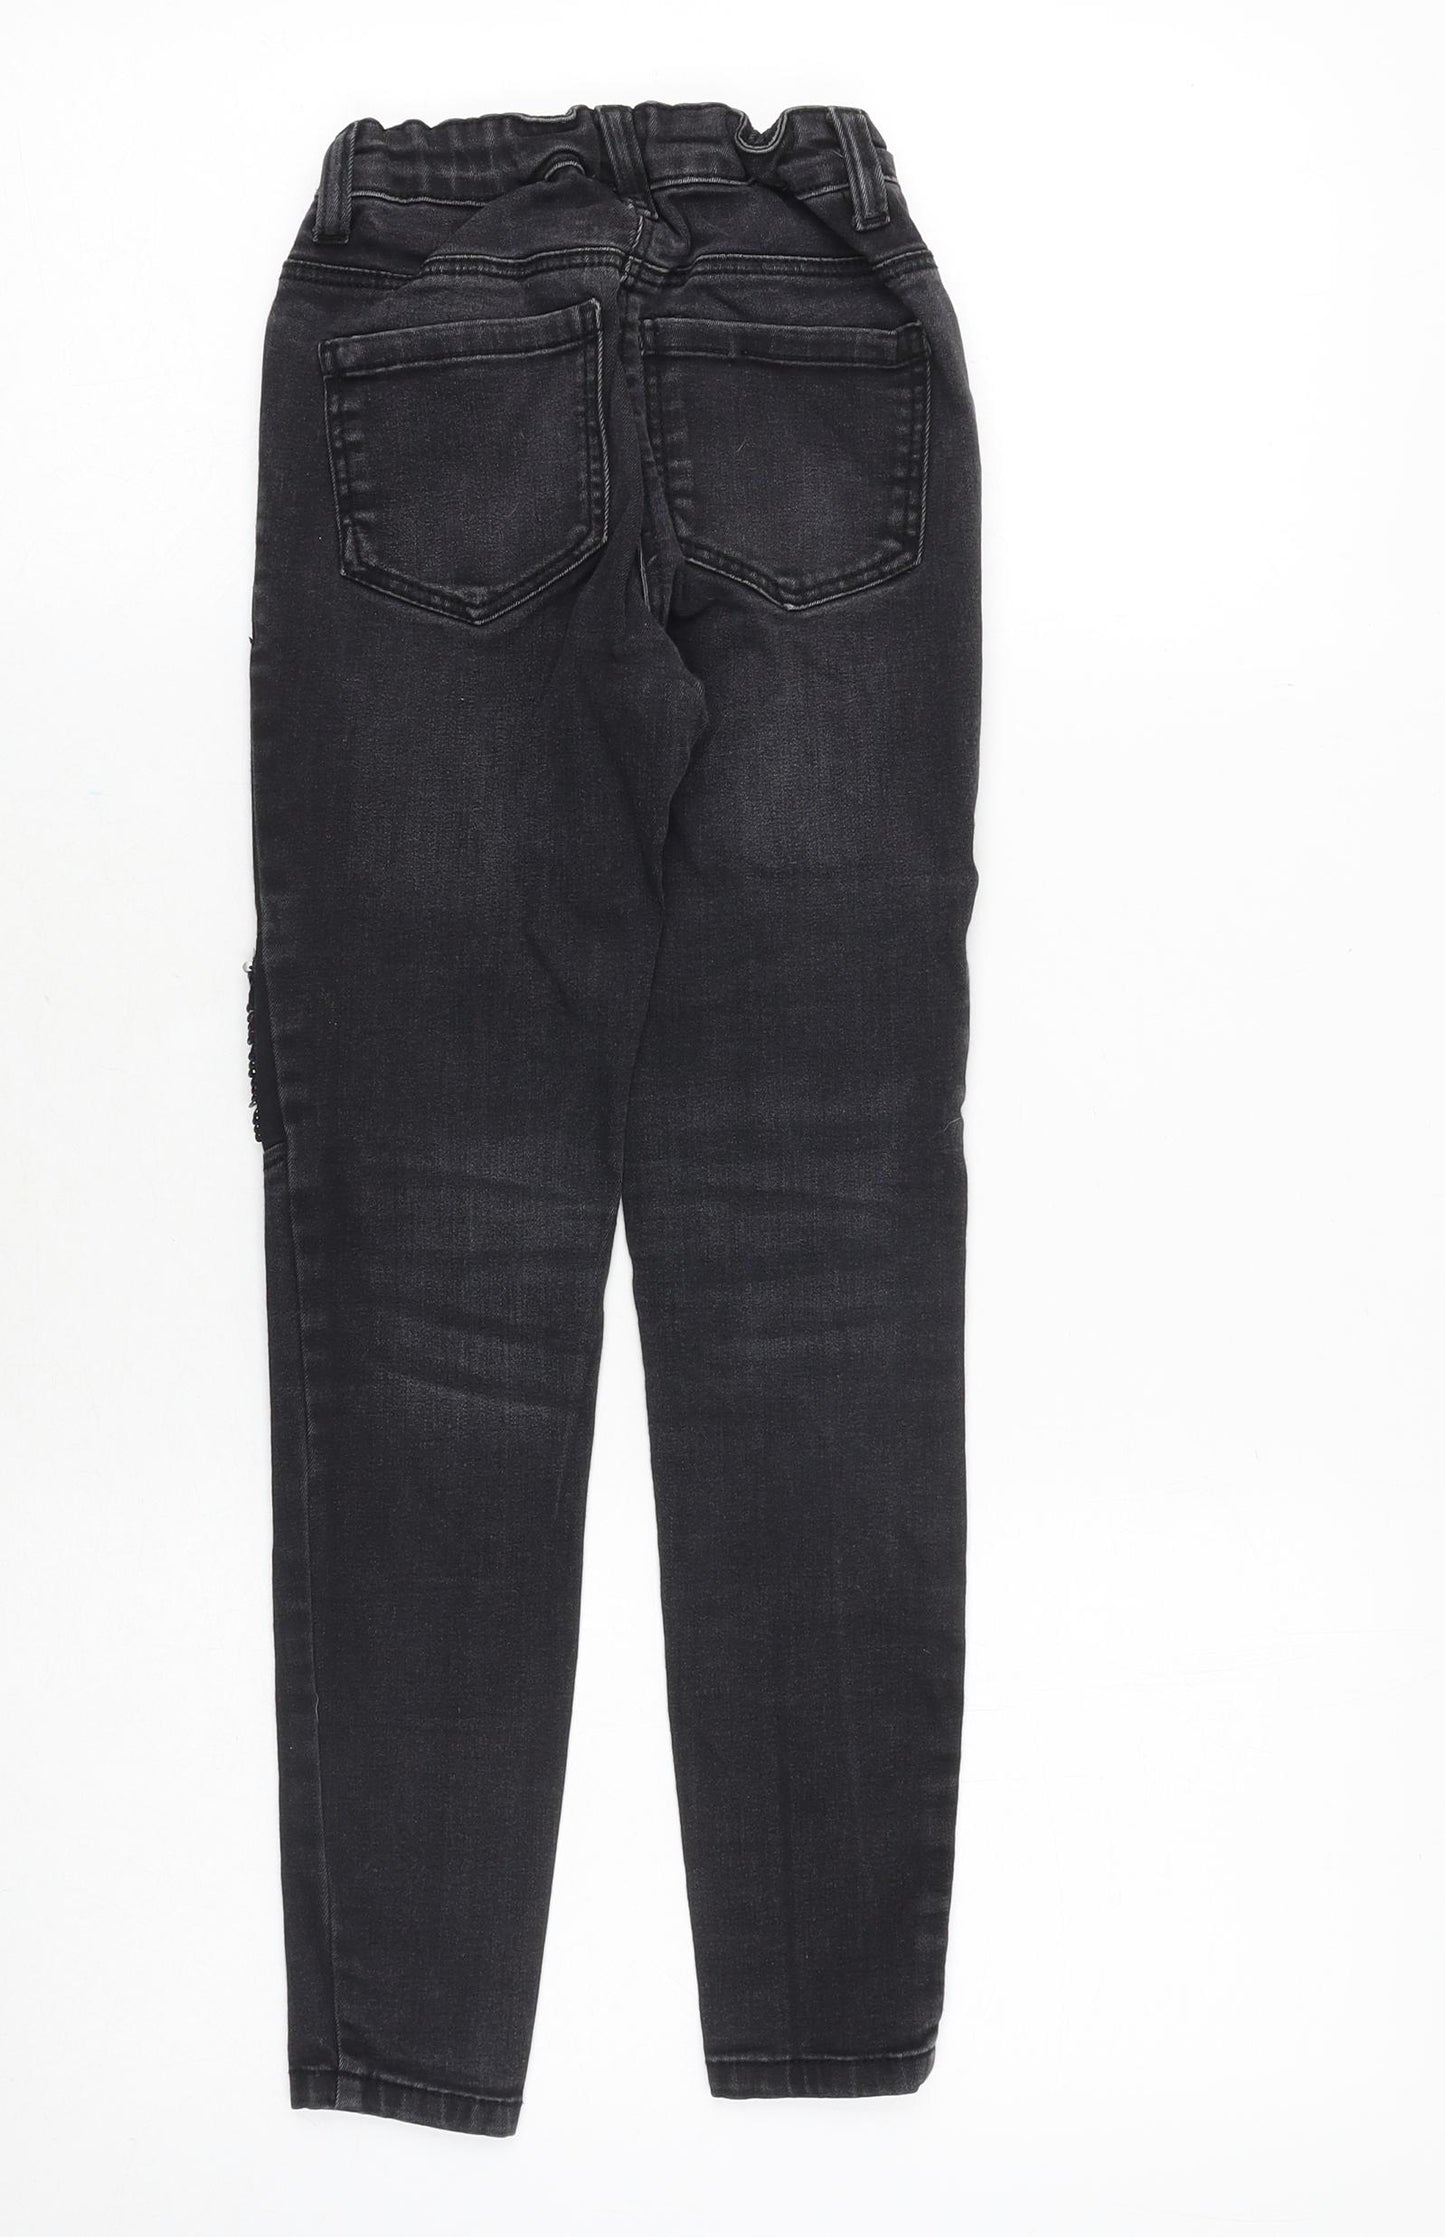 TU Girls Black Cotton Skinny Jeans Size 9 Years Regular Zip